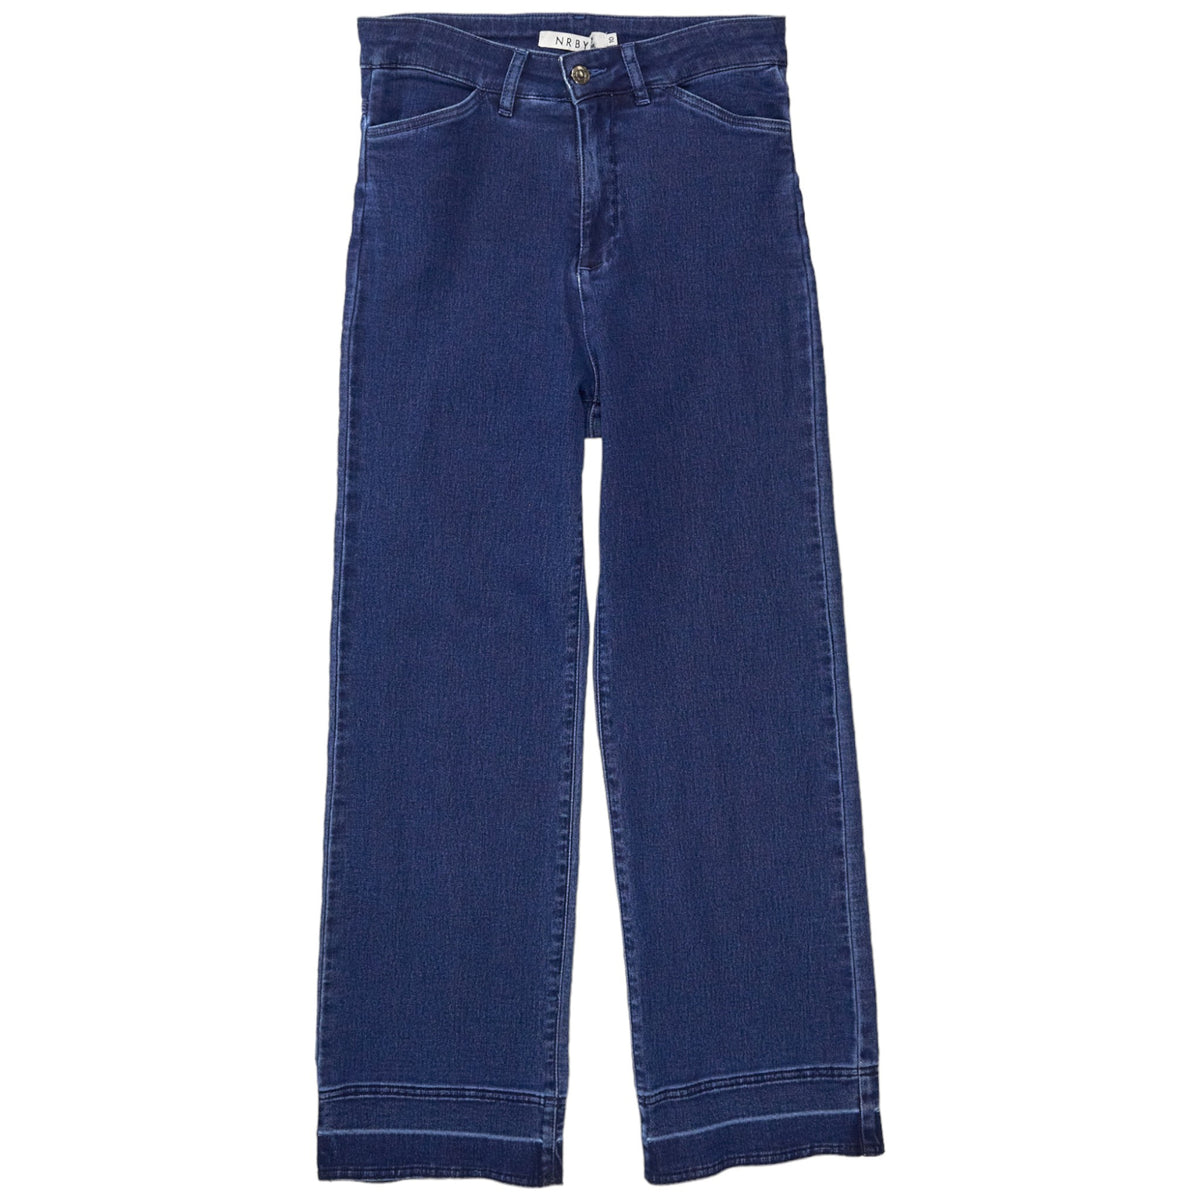 NRBY Blue Jet Denim Jeans